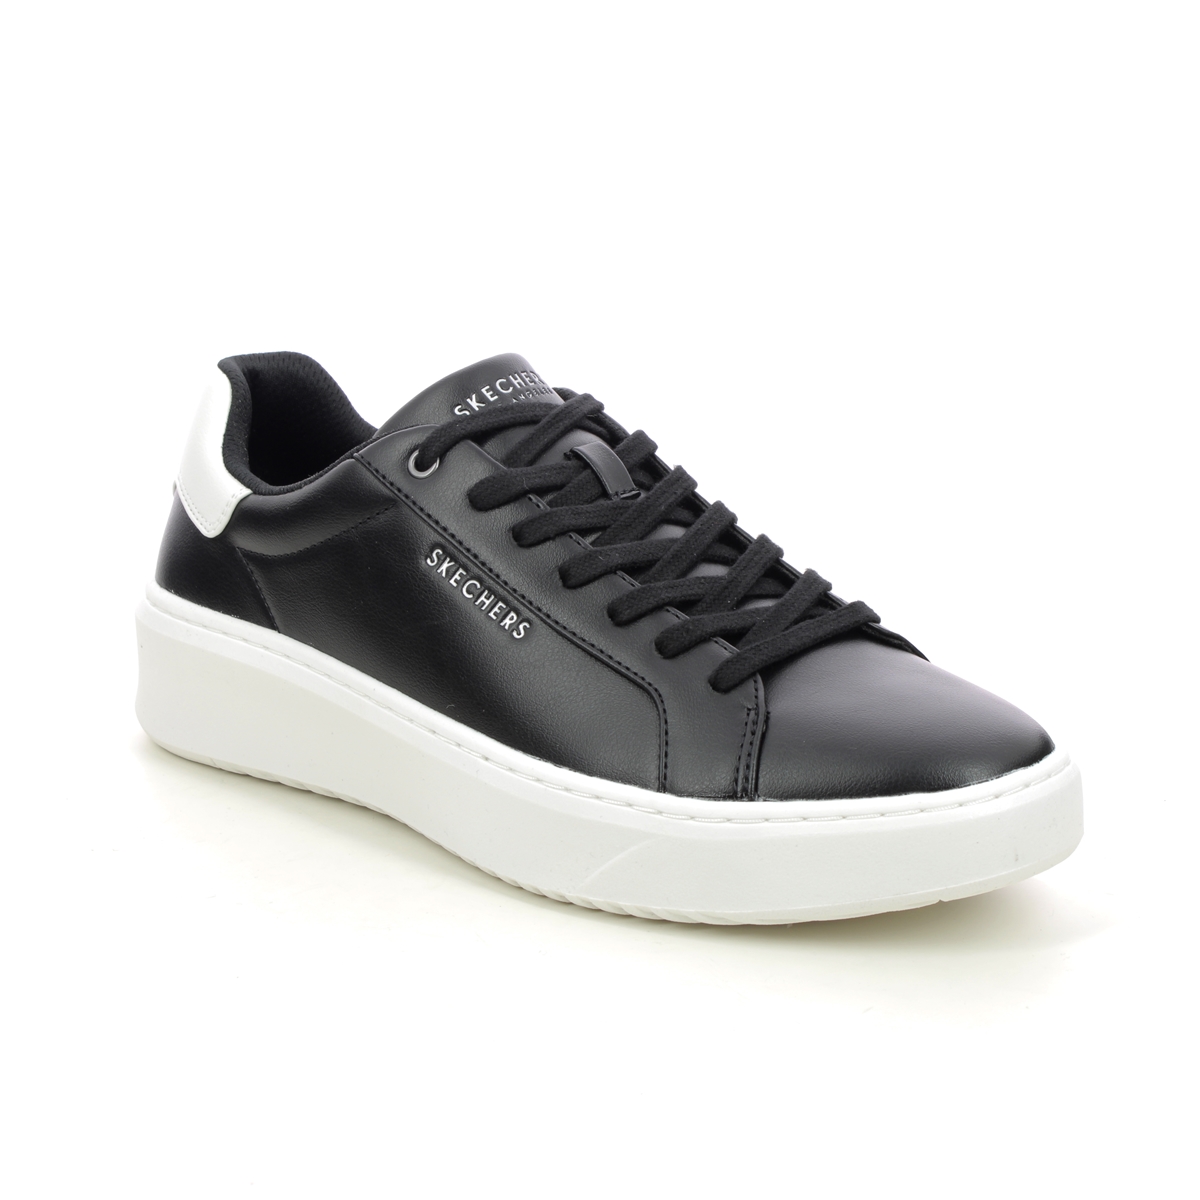 Skechers Court Break BLK Black Mens fashion shoes 183175 in a Plain Man-made in Size 8